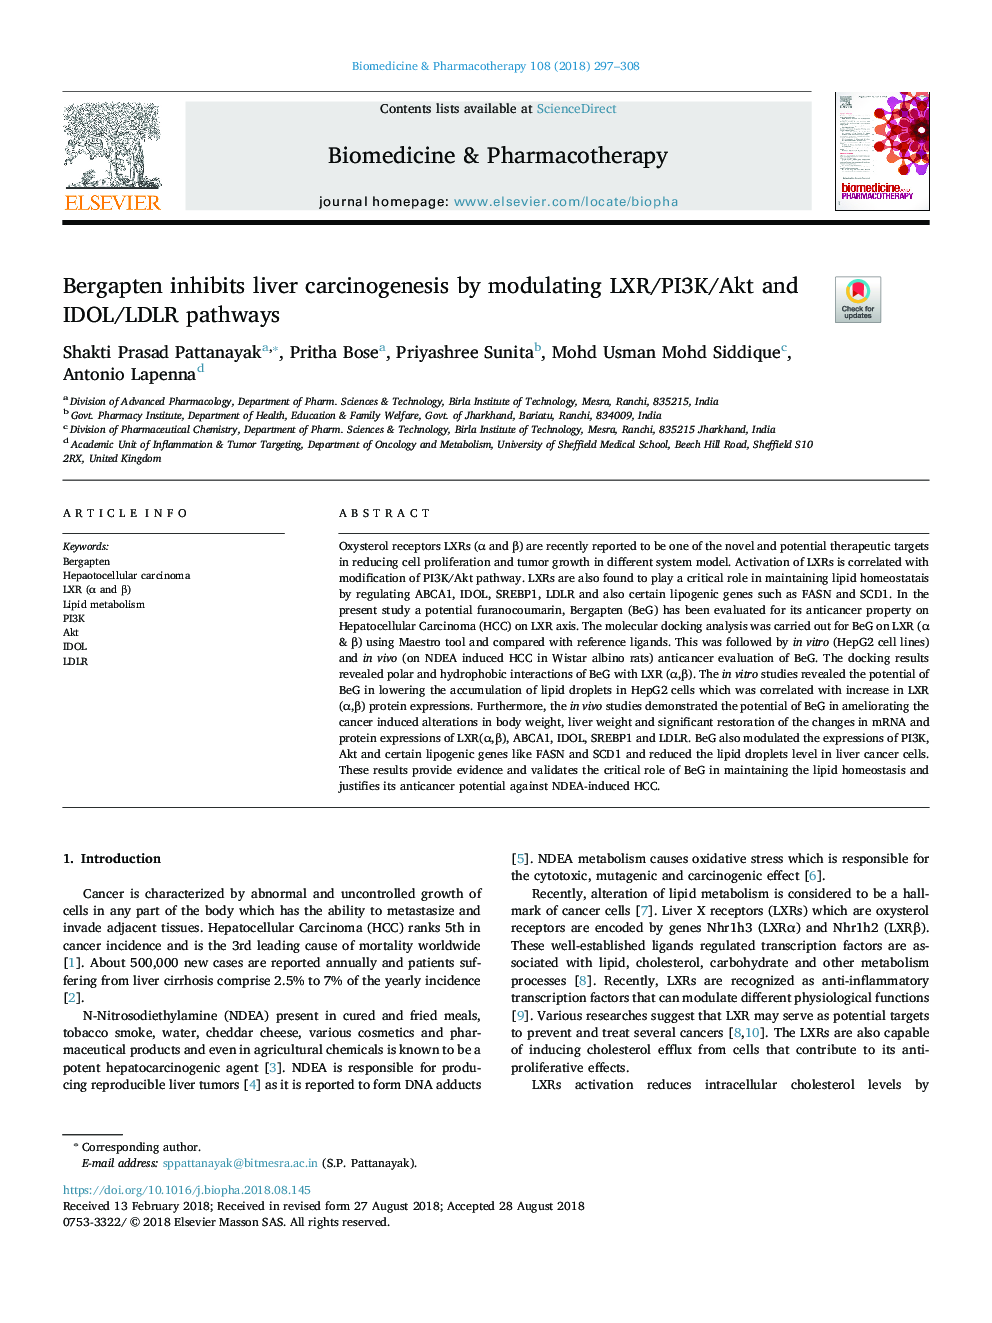 Bergapten inhibits liver carcinogenesis by modulating LXR/PI3K/Akt and IDOL/LDLR pathways